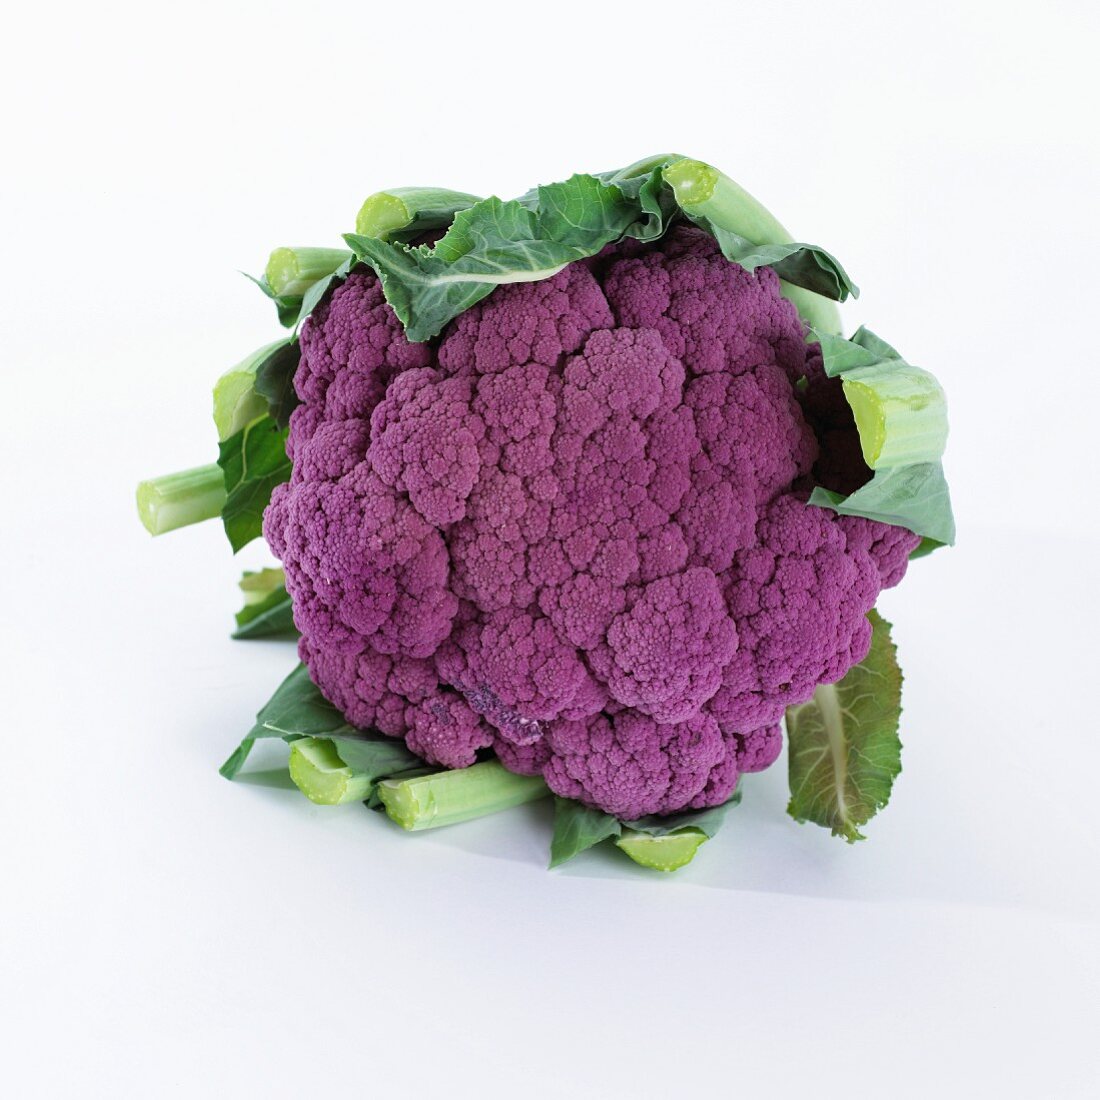 A purple cauliflower